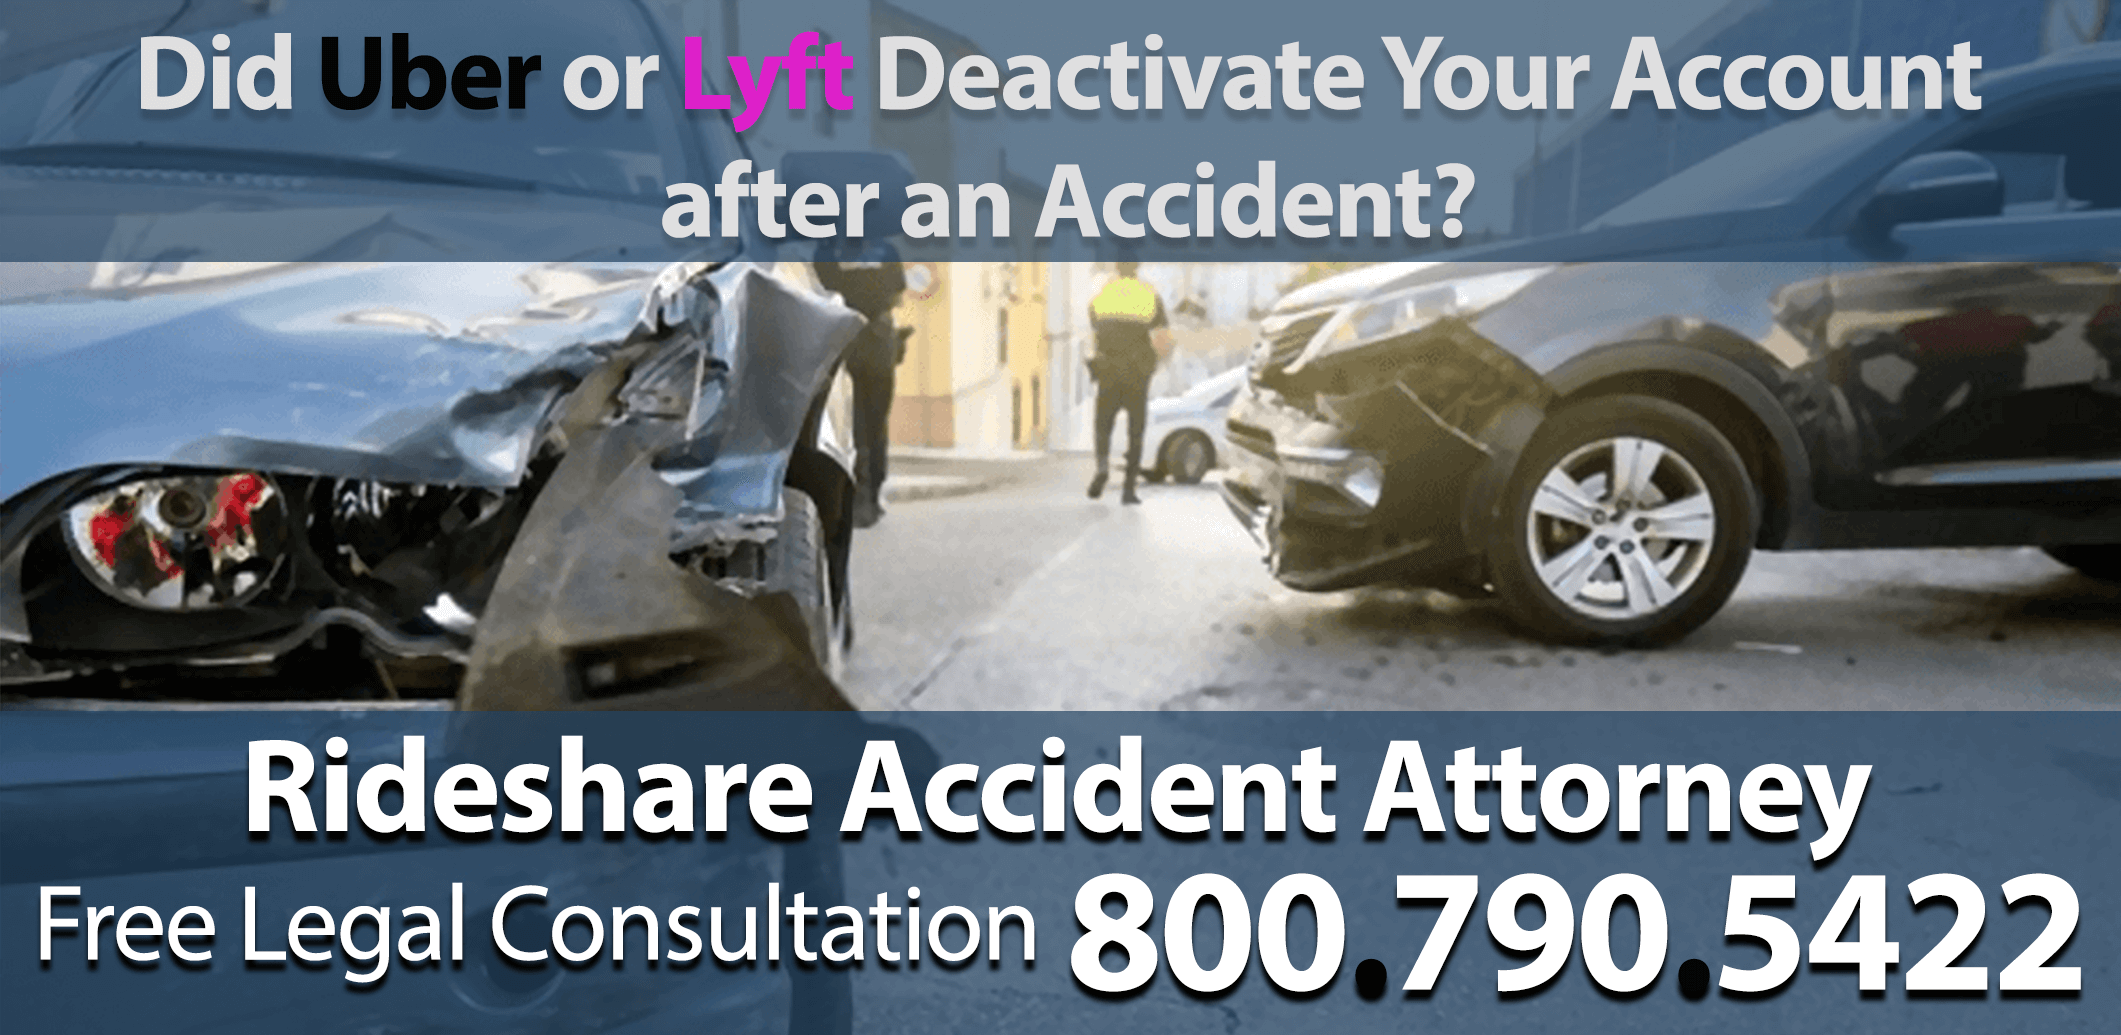 uber lyft rideshare accident deactivate delete injury lawyer attorney compensation sue